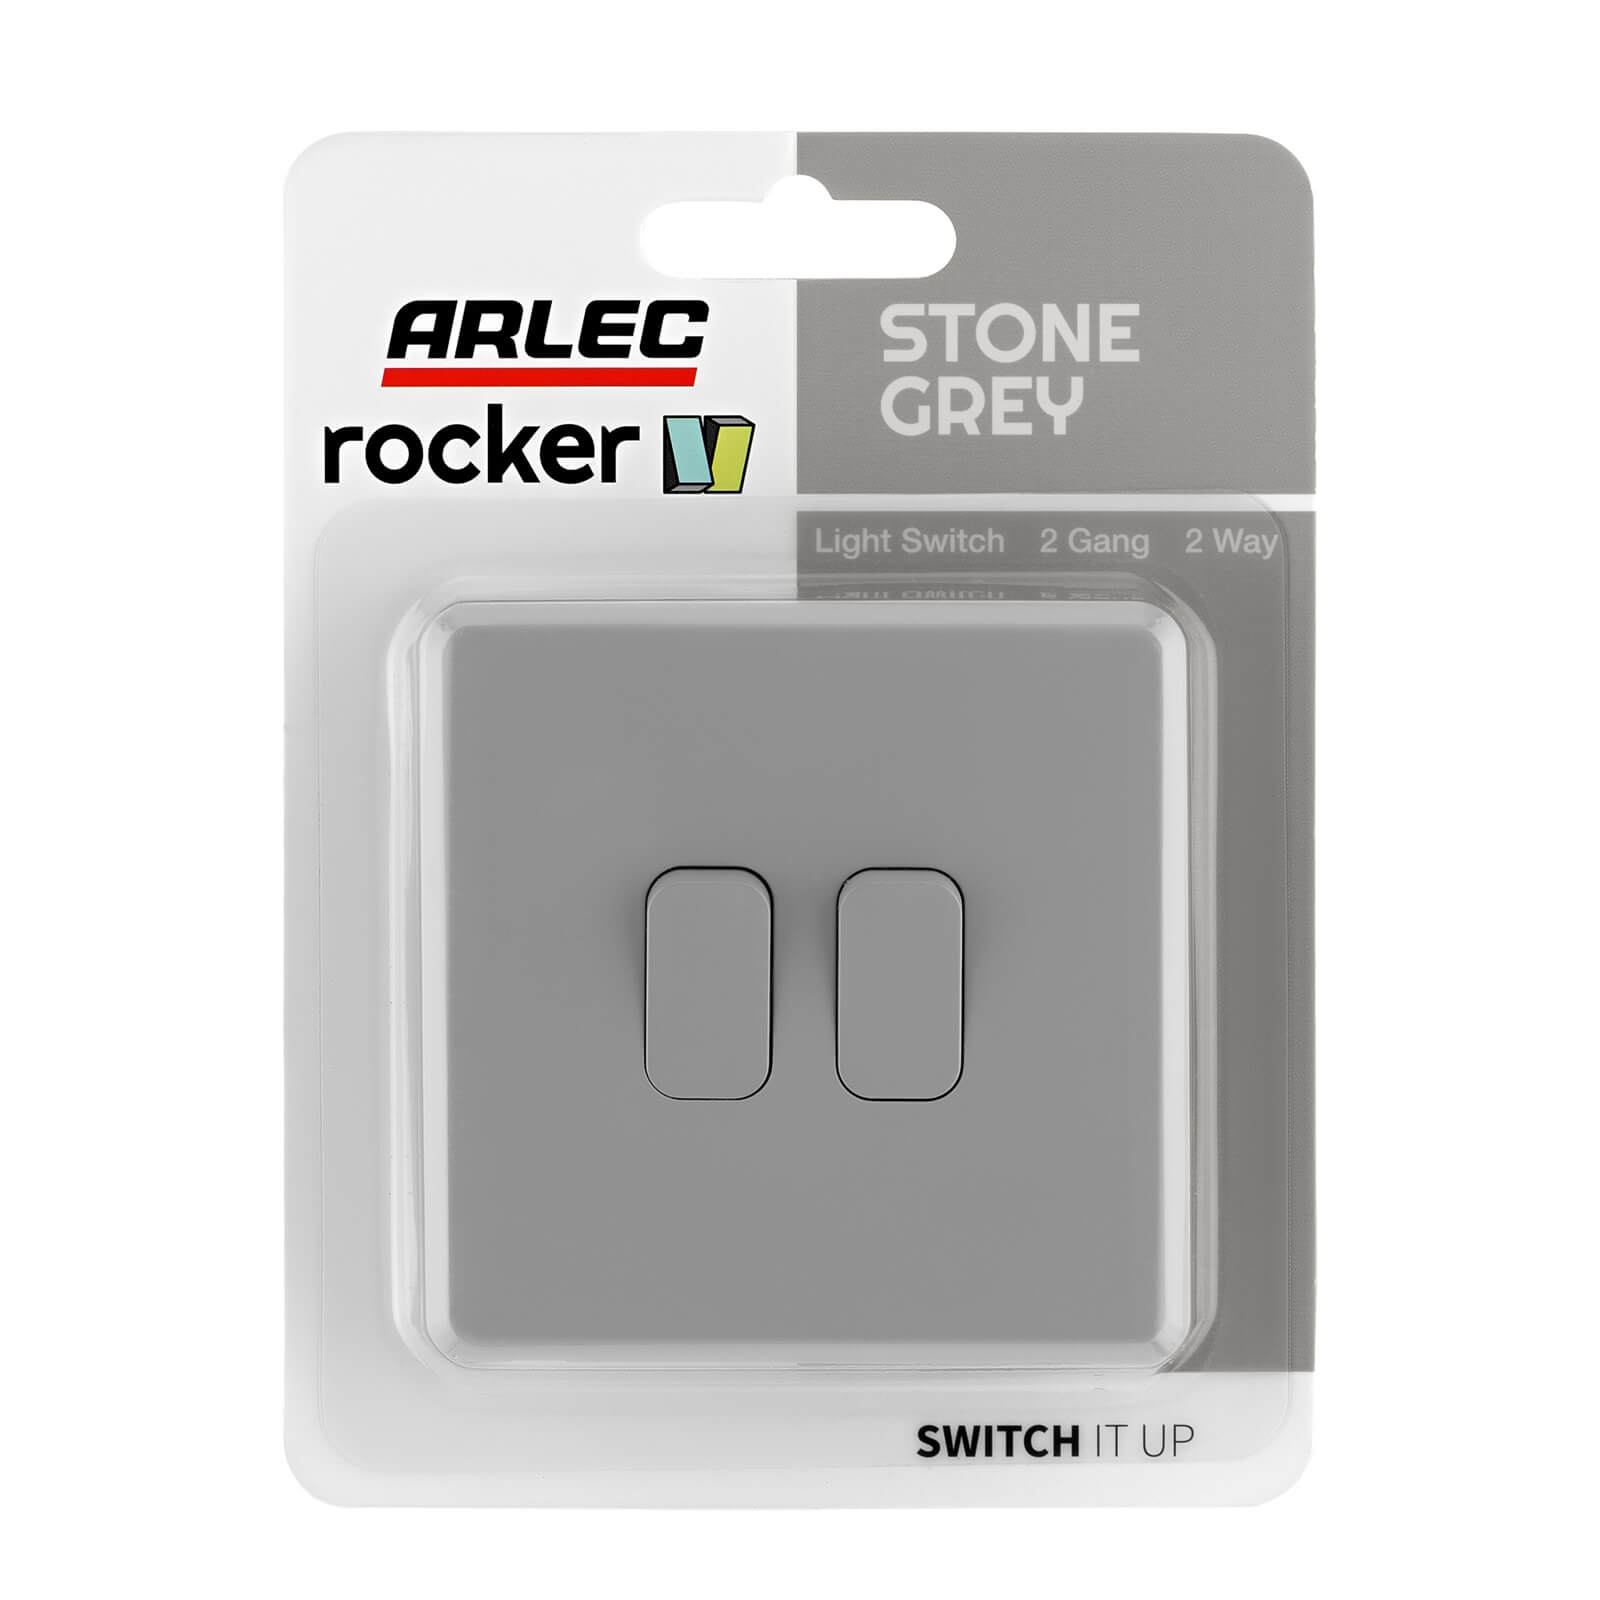 Arlec Rocker 10A 2Gang 2Way Stone Grey Double light switch